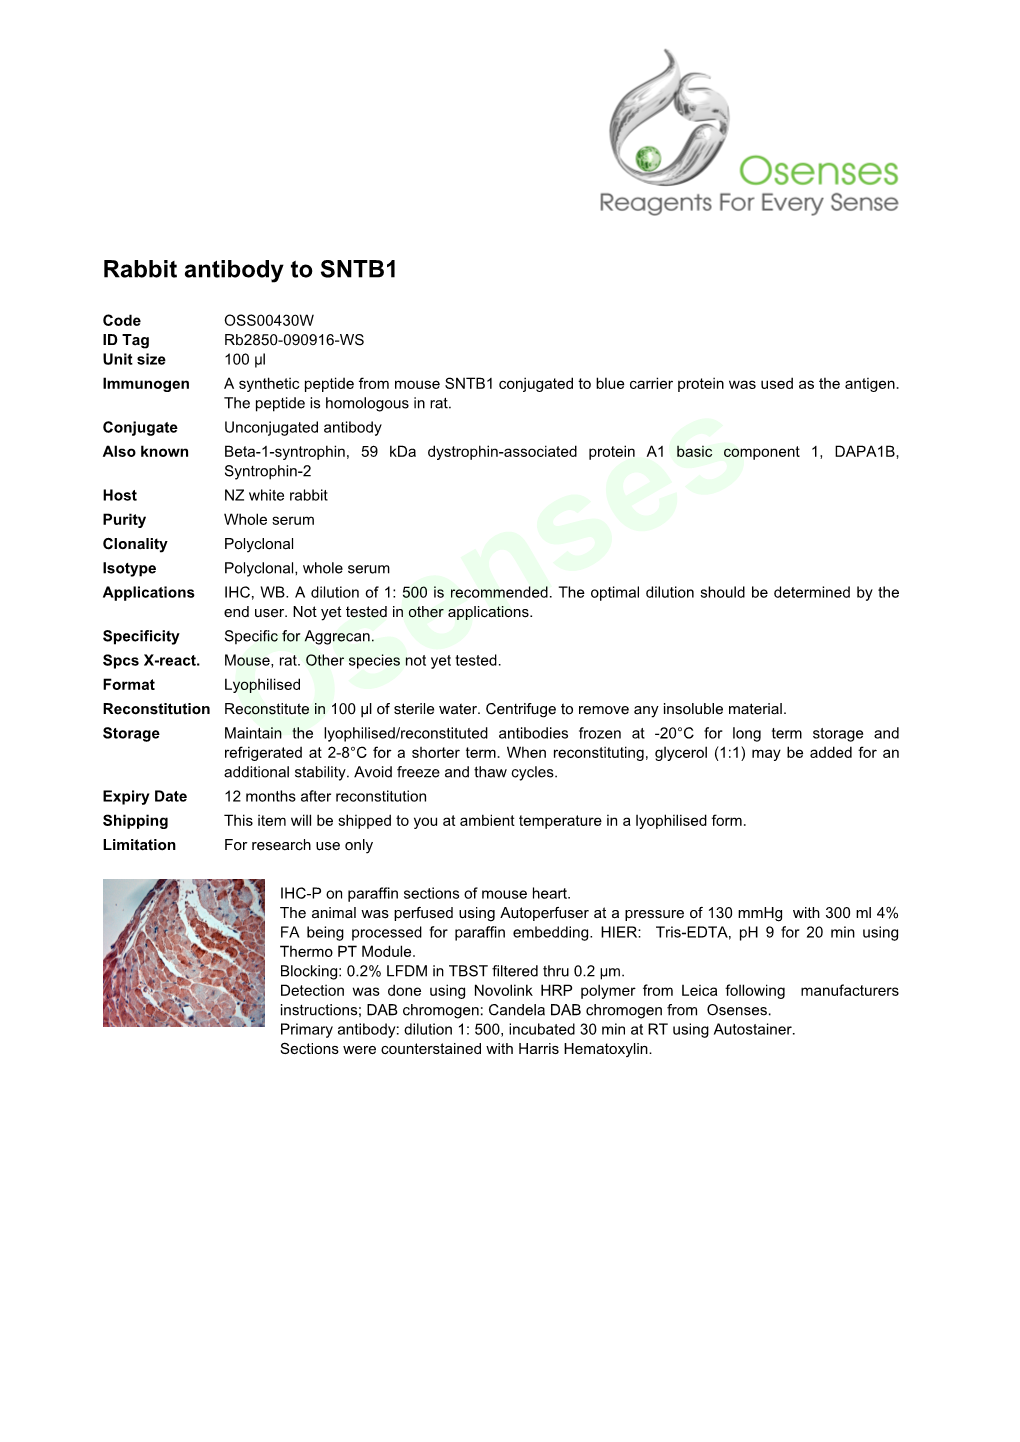 Rabbit Antibody to SNTB1